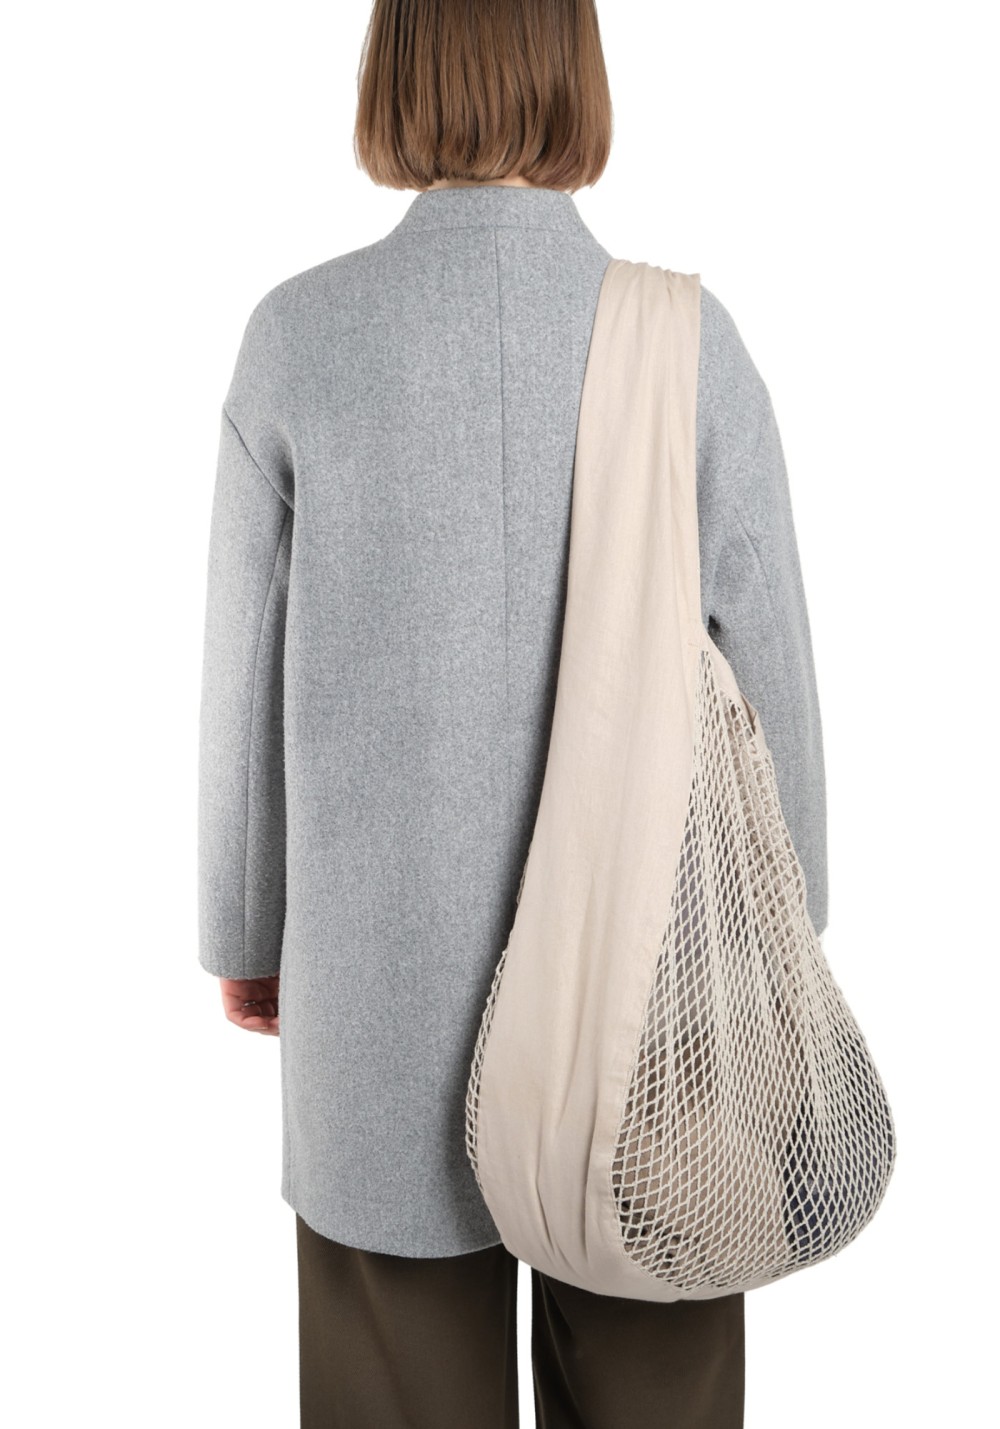 The Organic Company - Netz-Tasche Net Shoulder Bag Stone